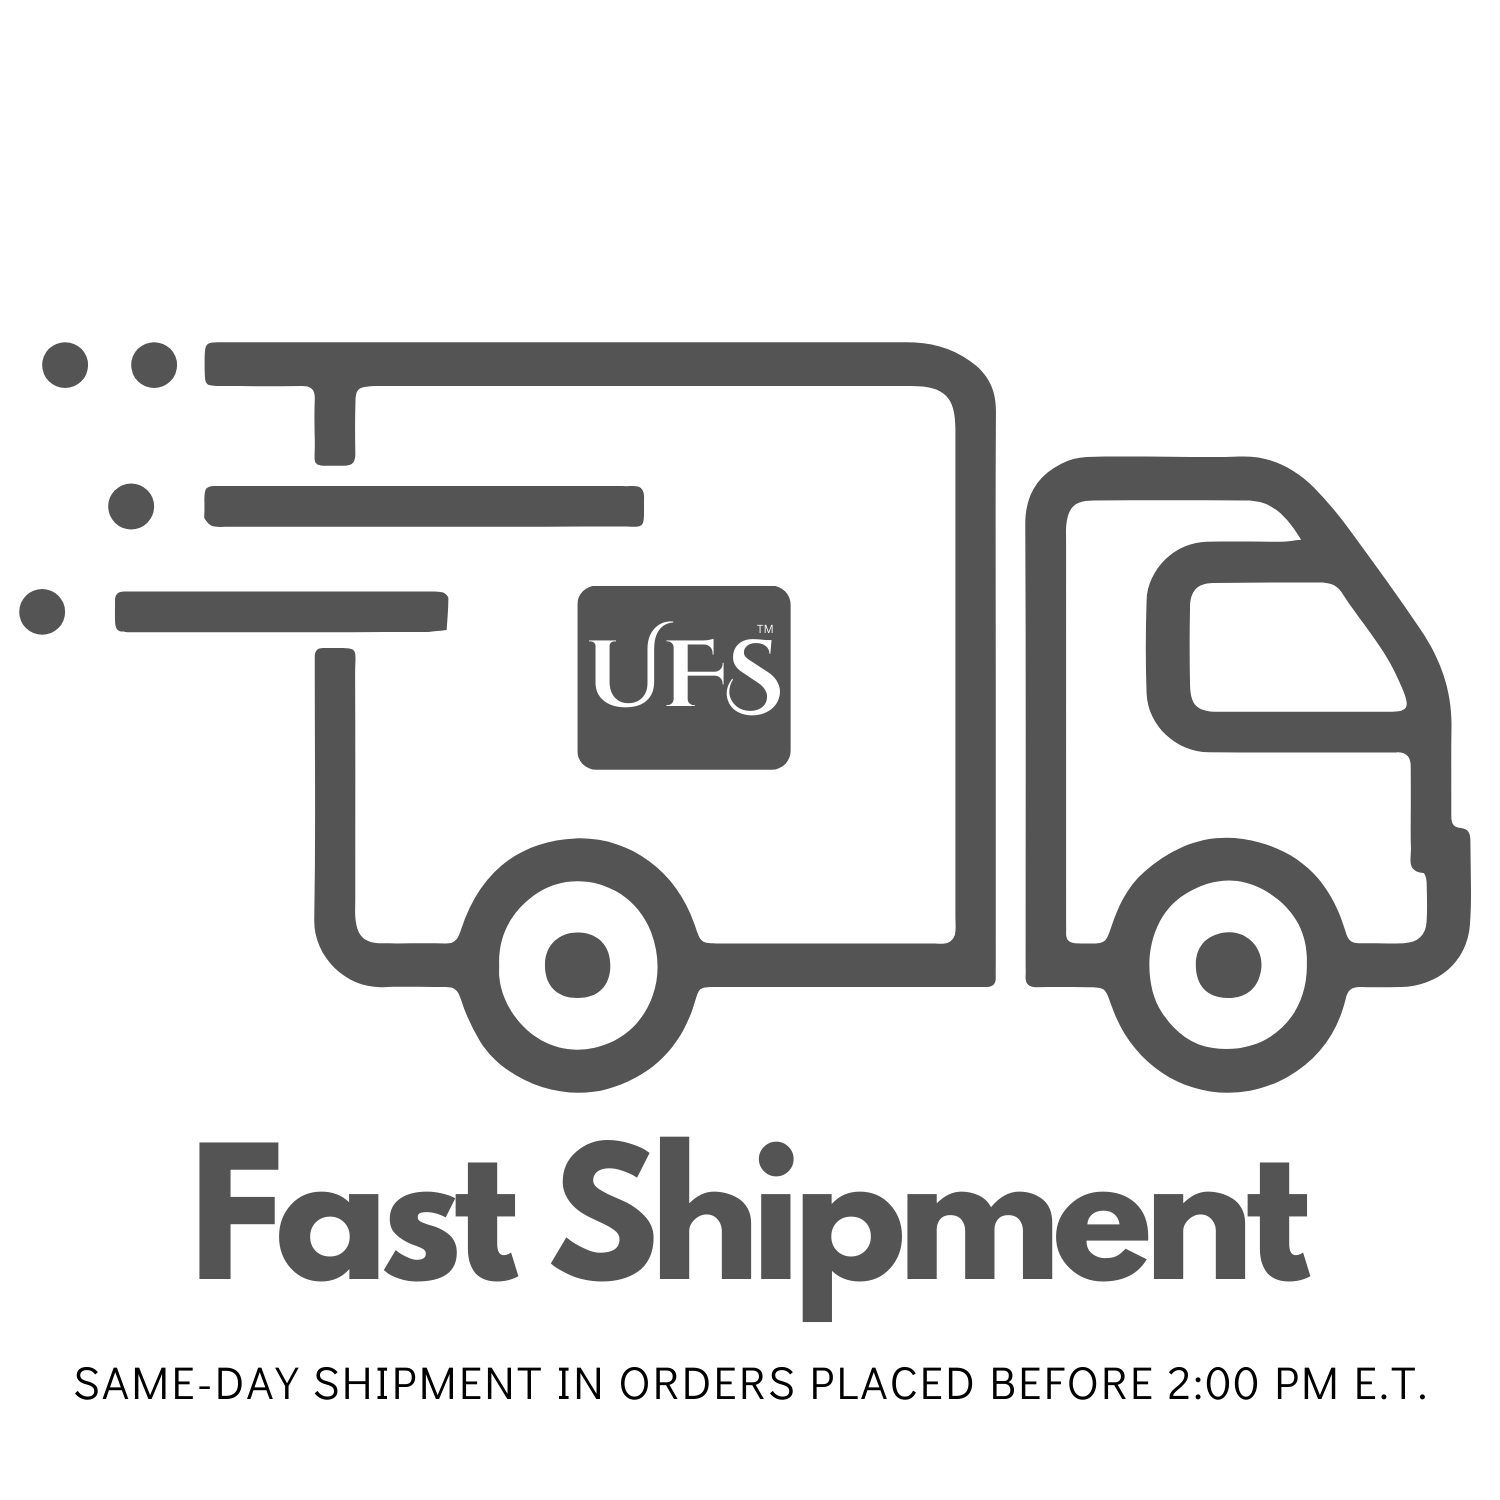 unique-feng-shui-fast-shipment.png